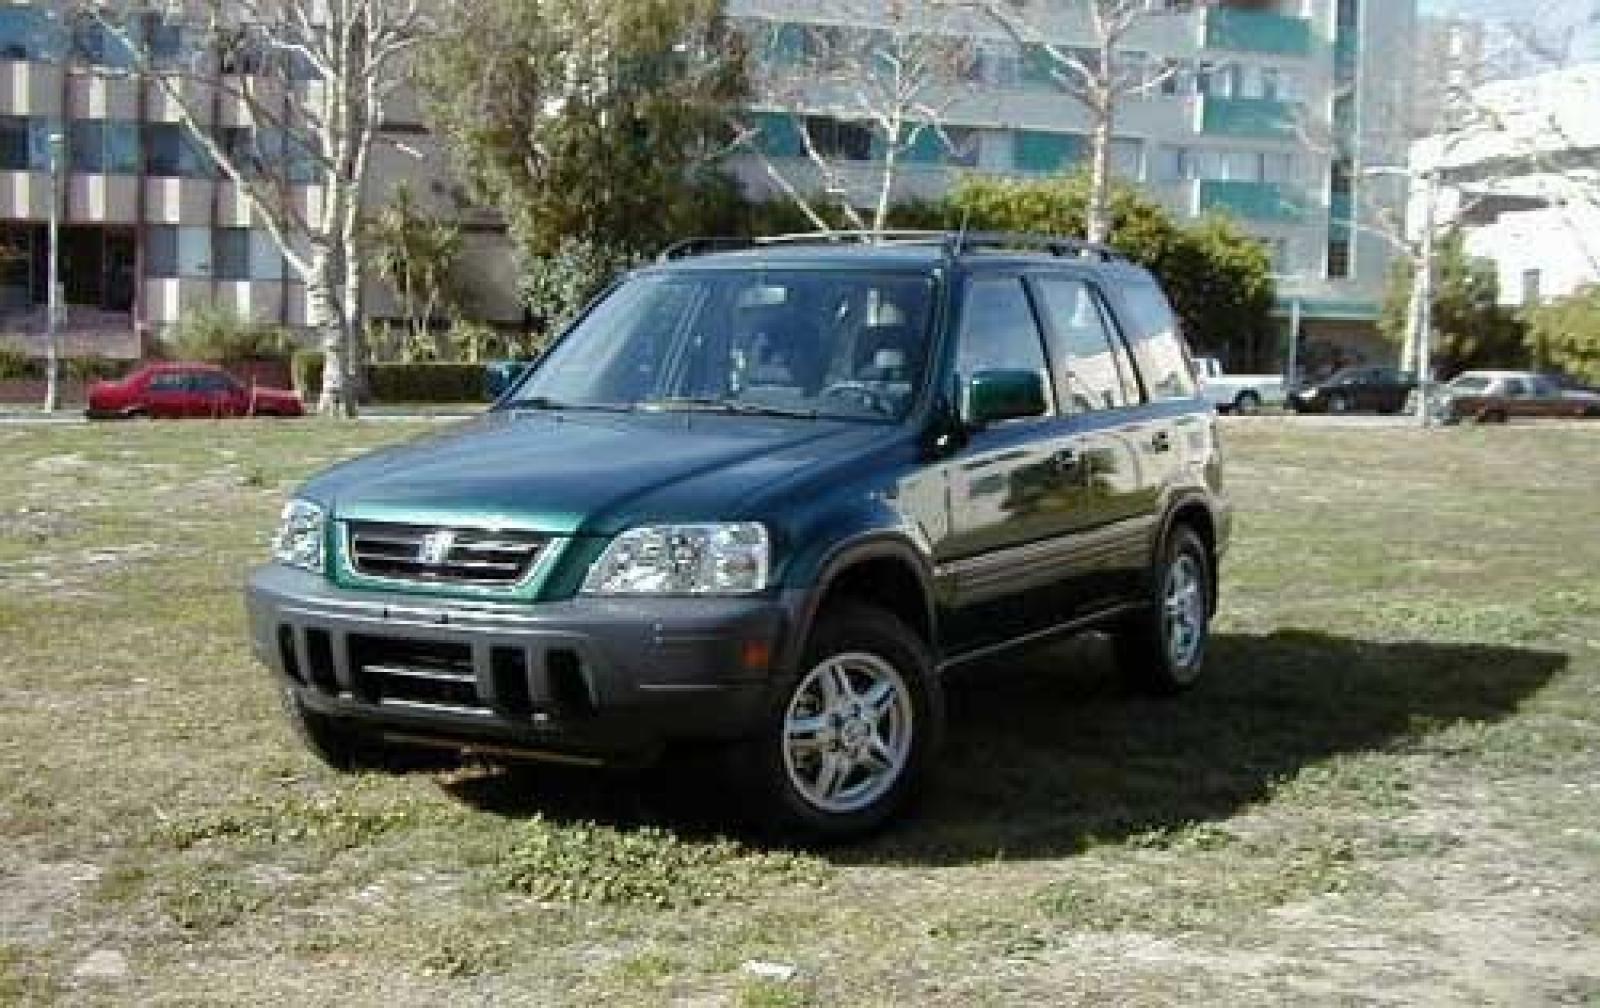 Хонда црв 2000 года. Хонда ЦРВ 1999-2005.